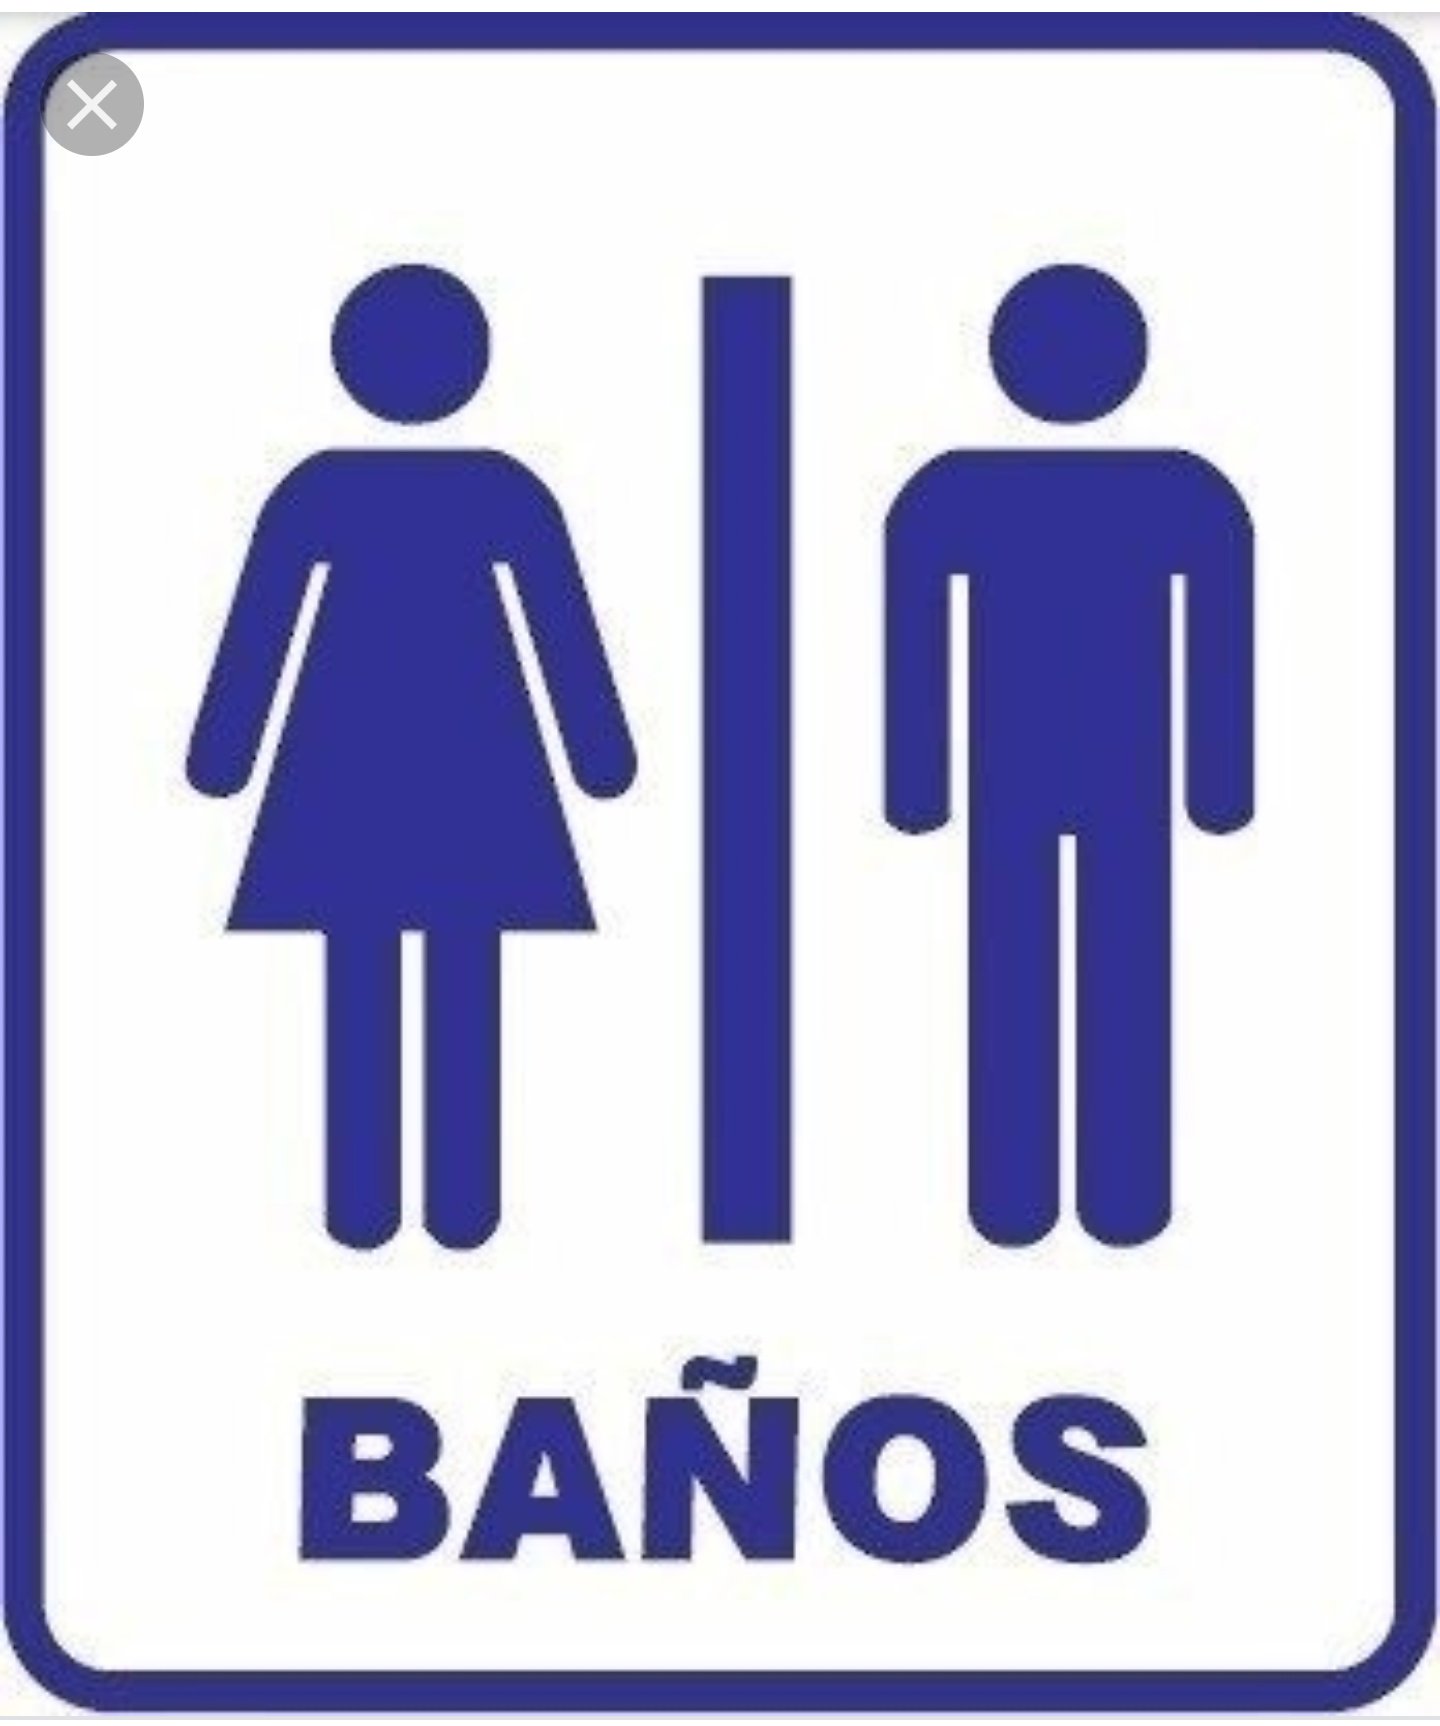 Reinaldo Rangel on Twitter: "@figualespanama Un baño con la señal siguiente les parece inclusiva? Esto es internacional unisex. https://t.co/frvFiqGds8" / Twitter